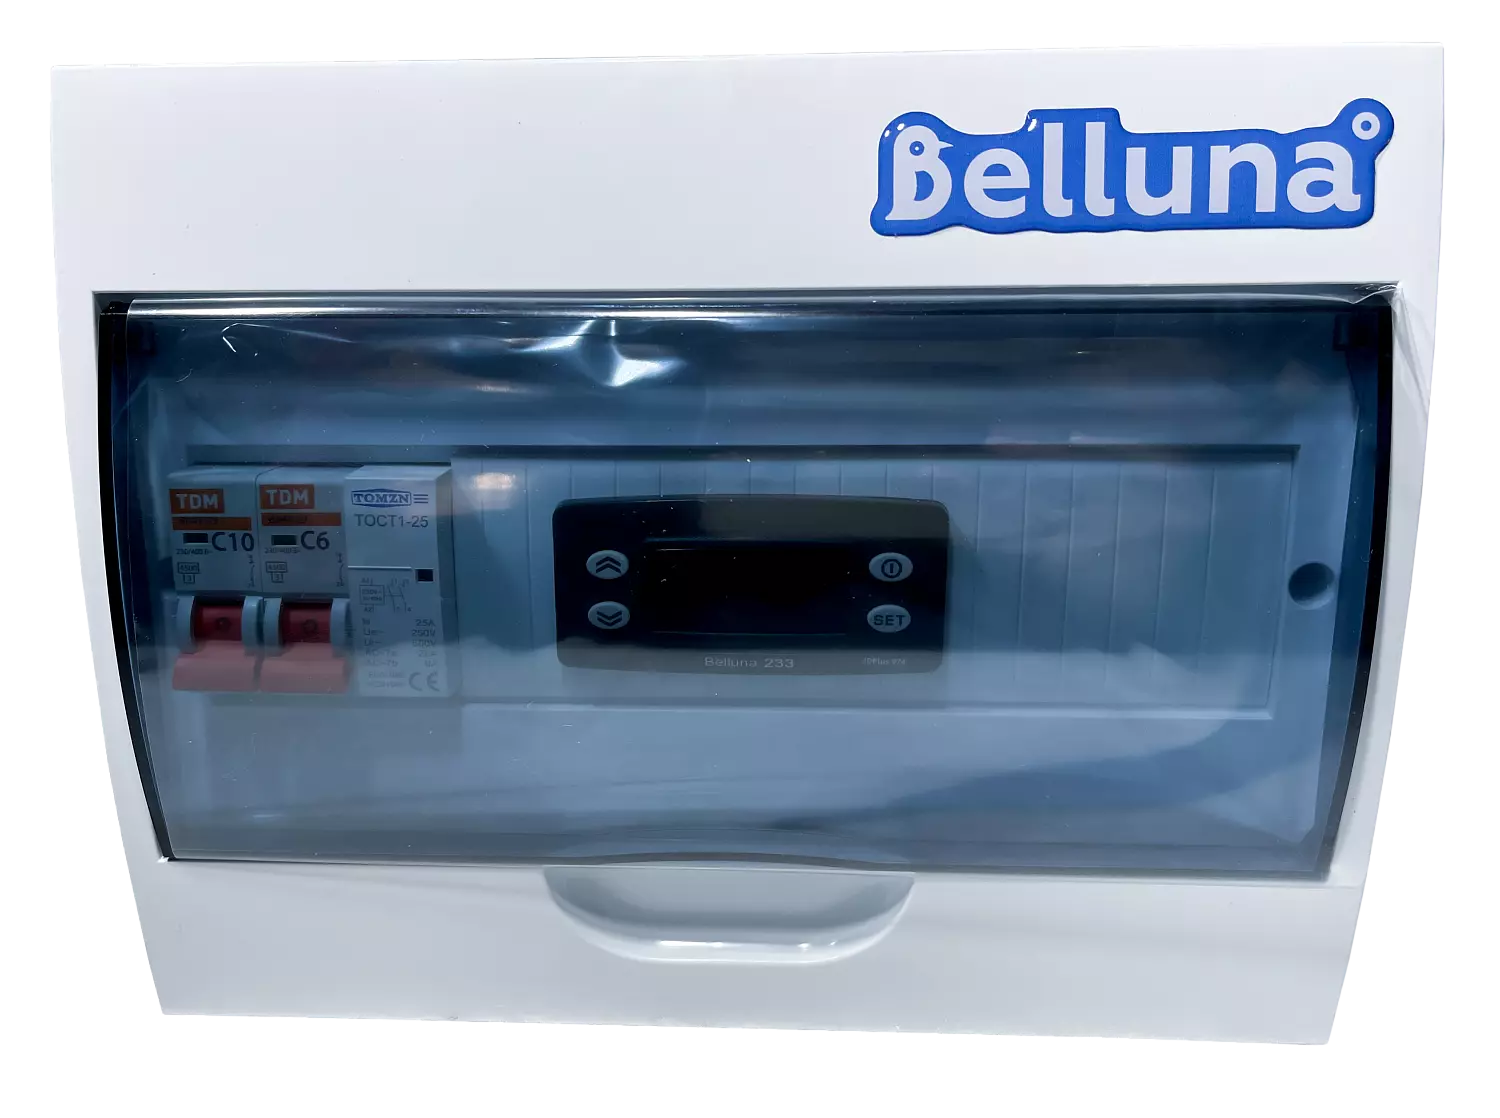 сплит-система Belluna S342 Самара